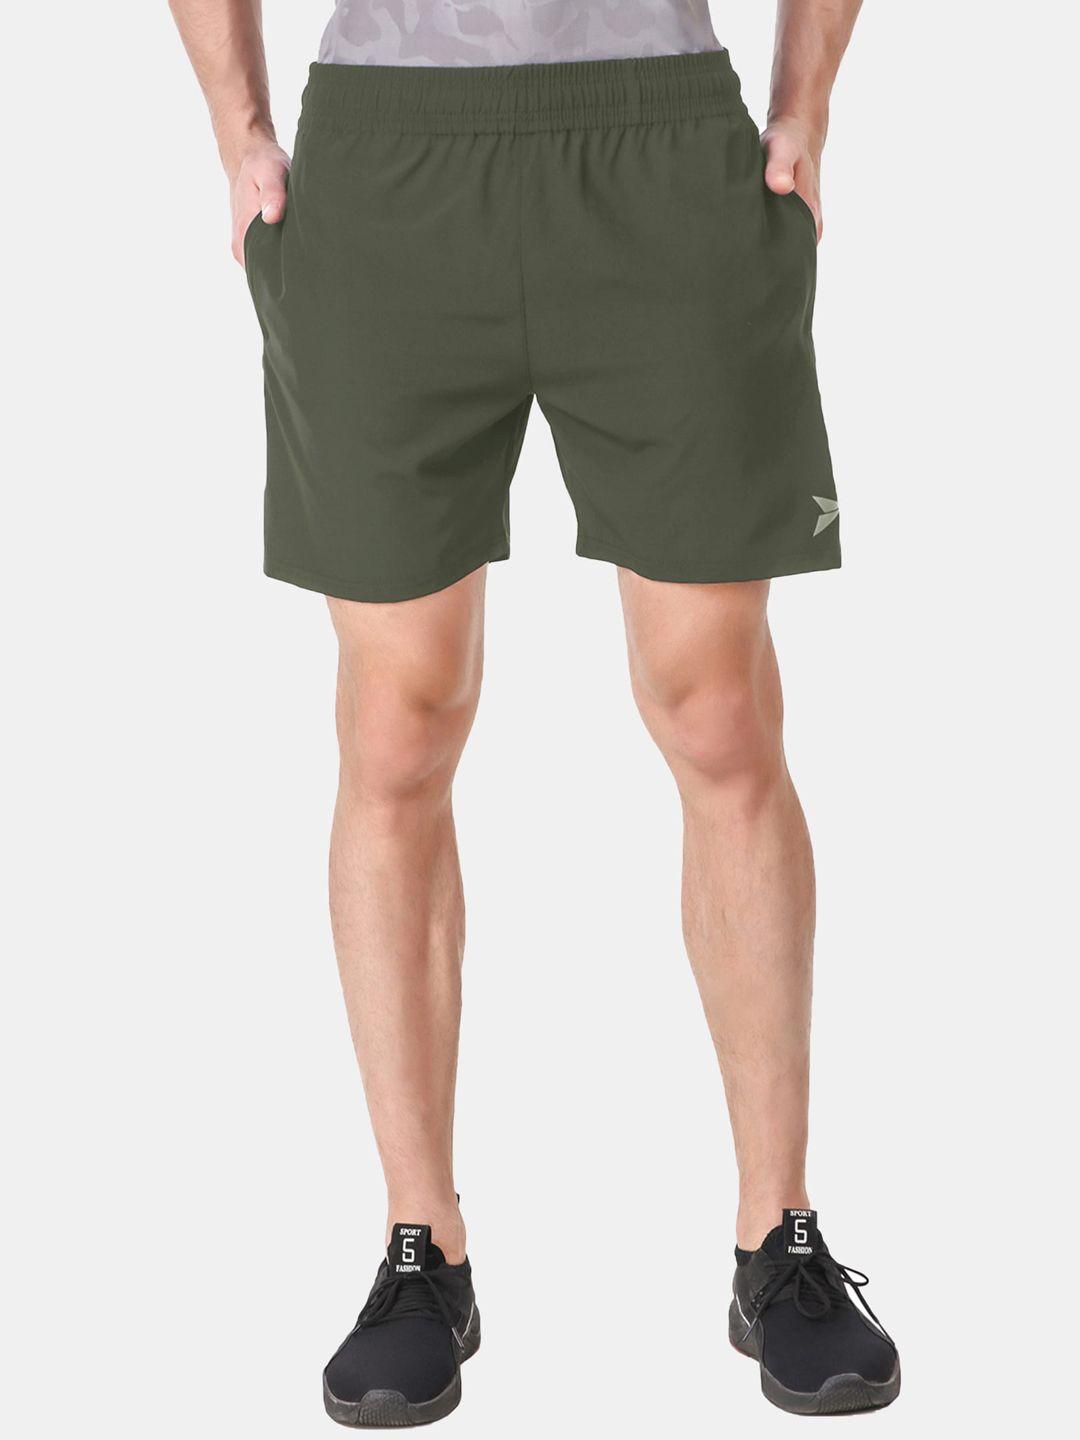 fitinc-men-green-slim-fit-running-sports-shorts